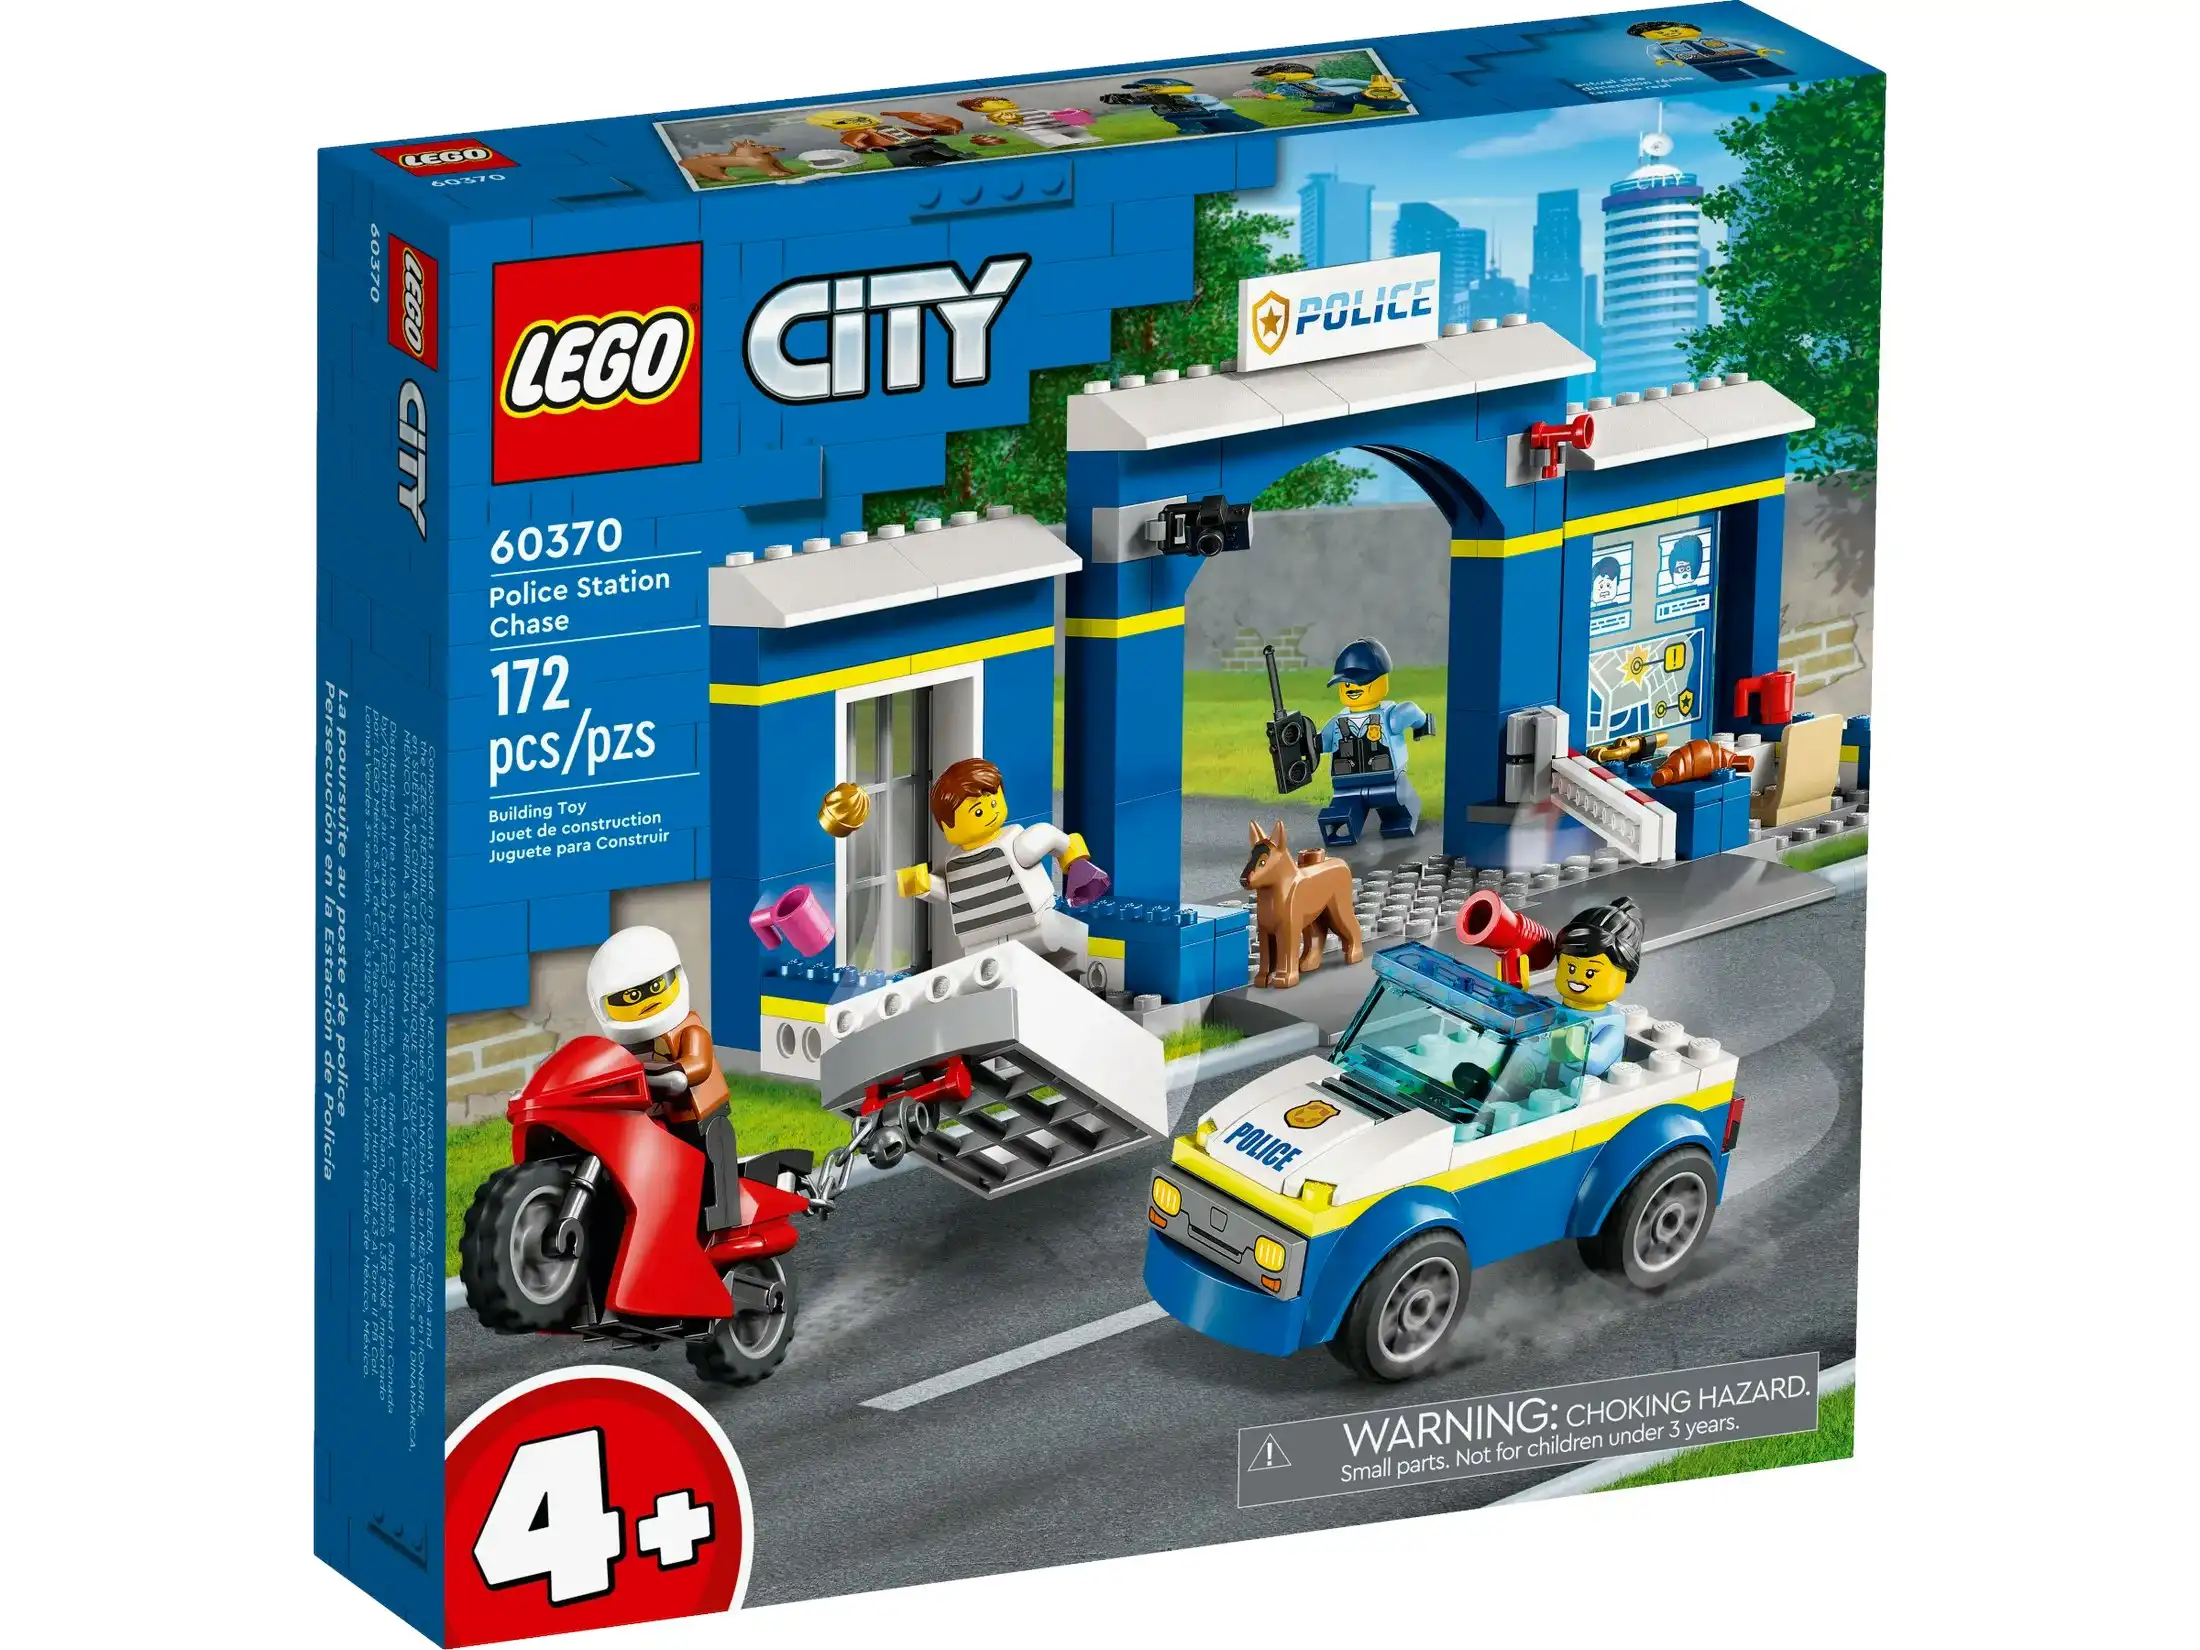 LEGO 60370 Police Station Chase - City 4+